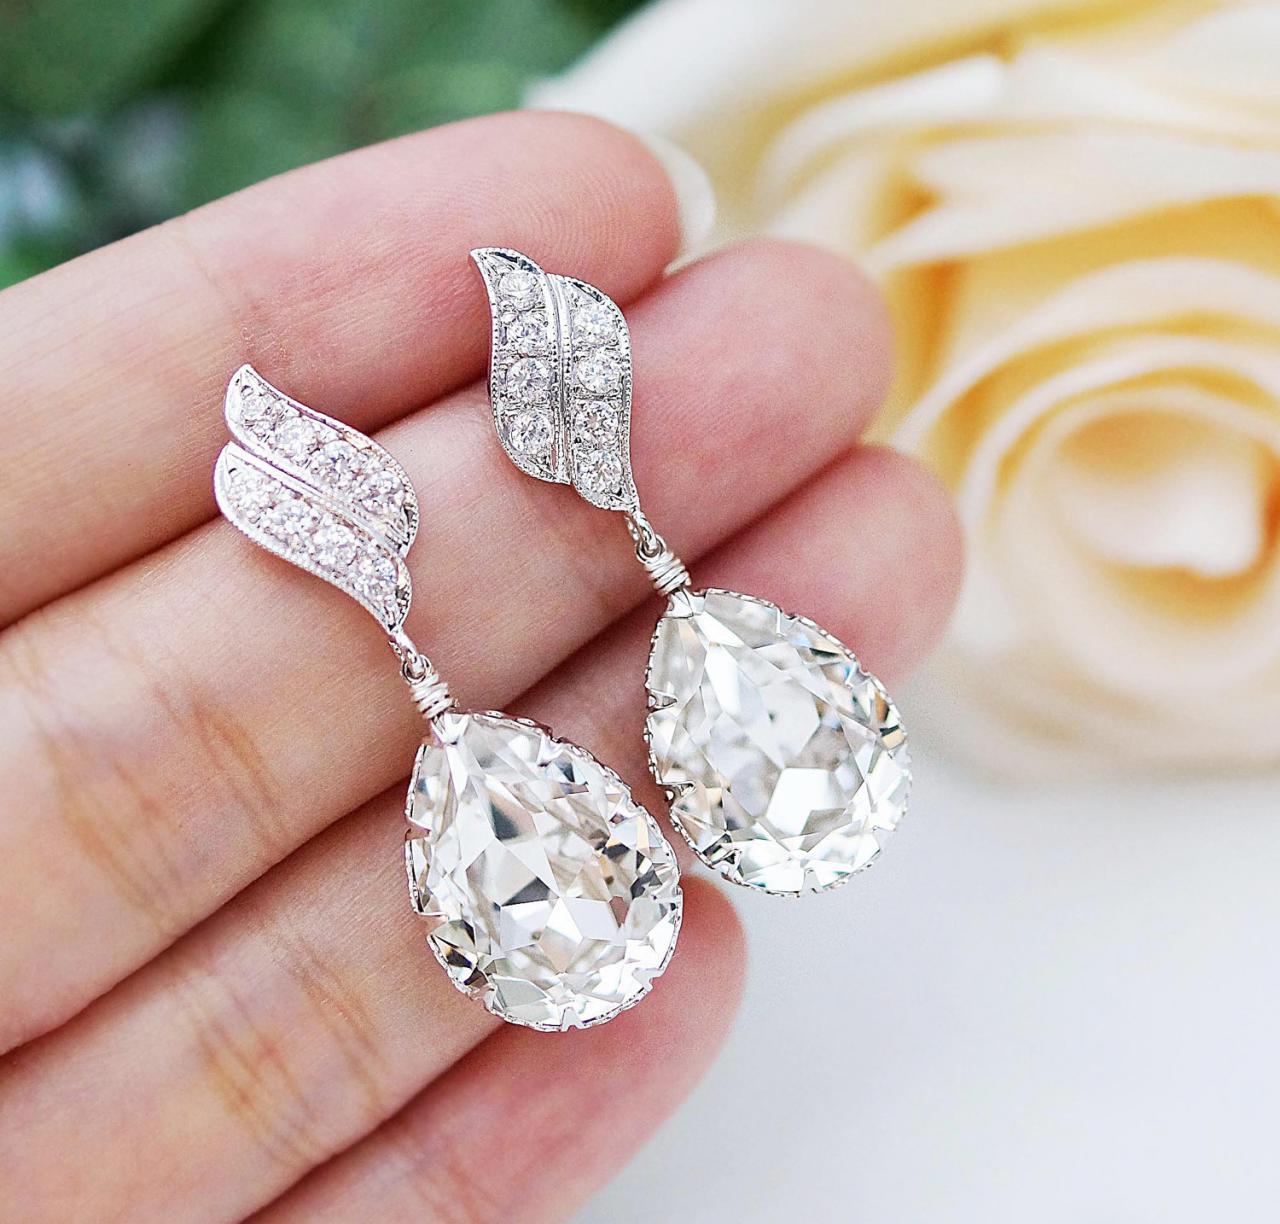 Wedding Jewelry Bridal Earrings Bridesmaid Dangle Earrings Lux Cubic Zirconia Earrings With Clear White Swarovski Crystal Tear Drop Earrings